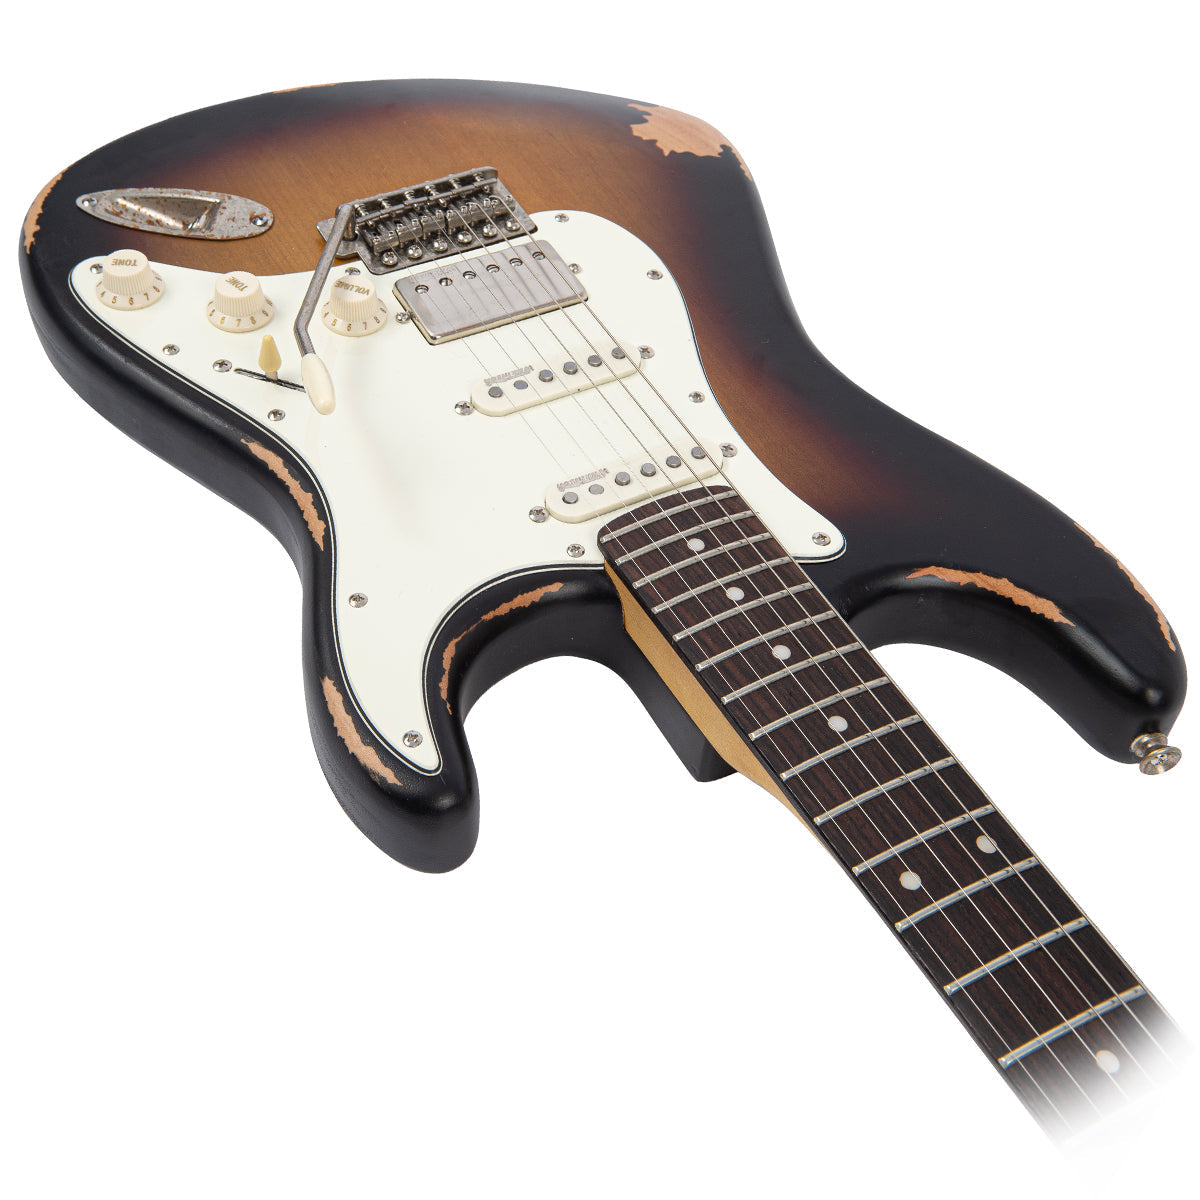 Vintage V6 Paul Rose Signature Electric Guitar ~ Distressed Sunset Sunburst, Electric Guitar for sale at Richards Guitars.